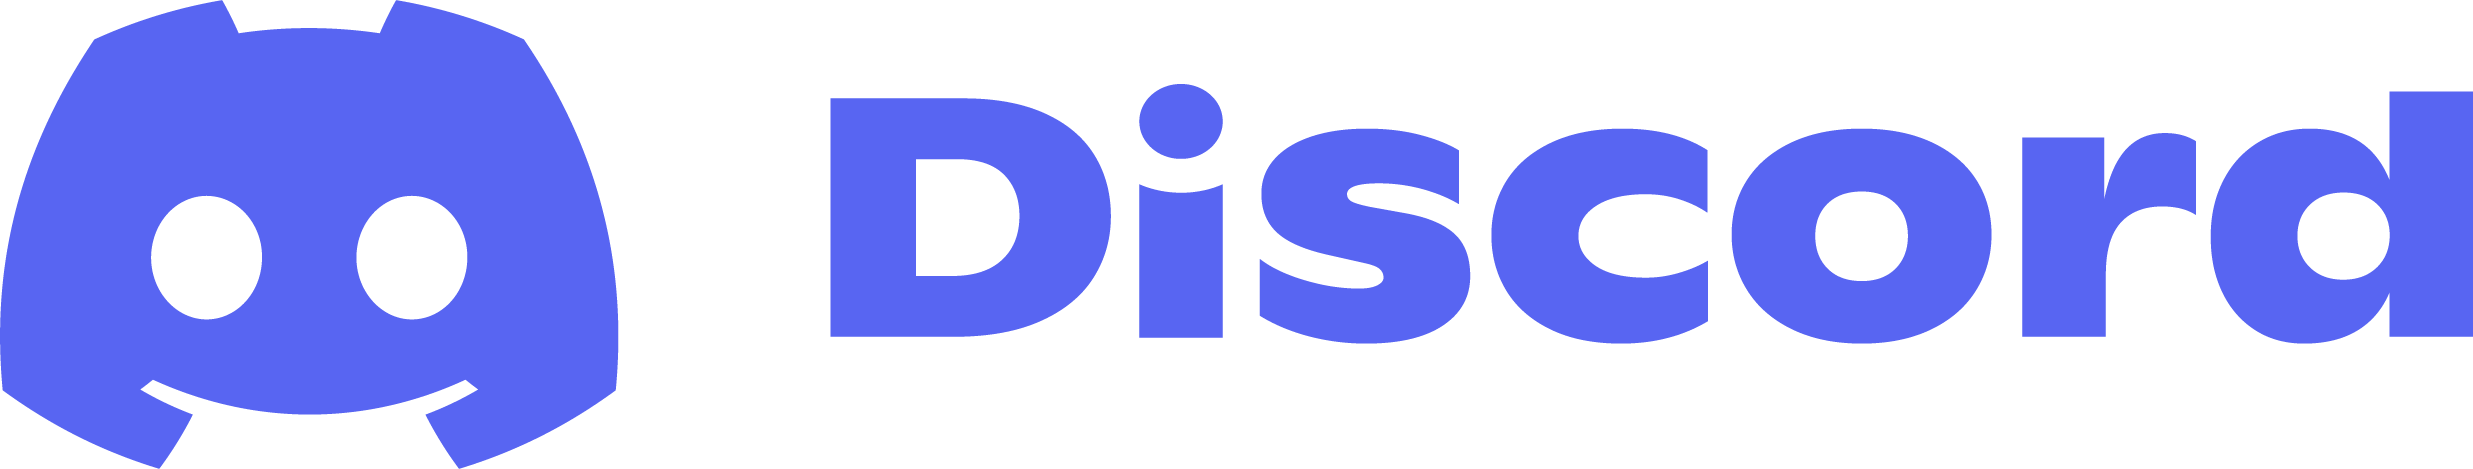 Discord logo blue